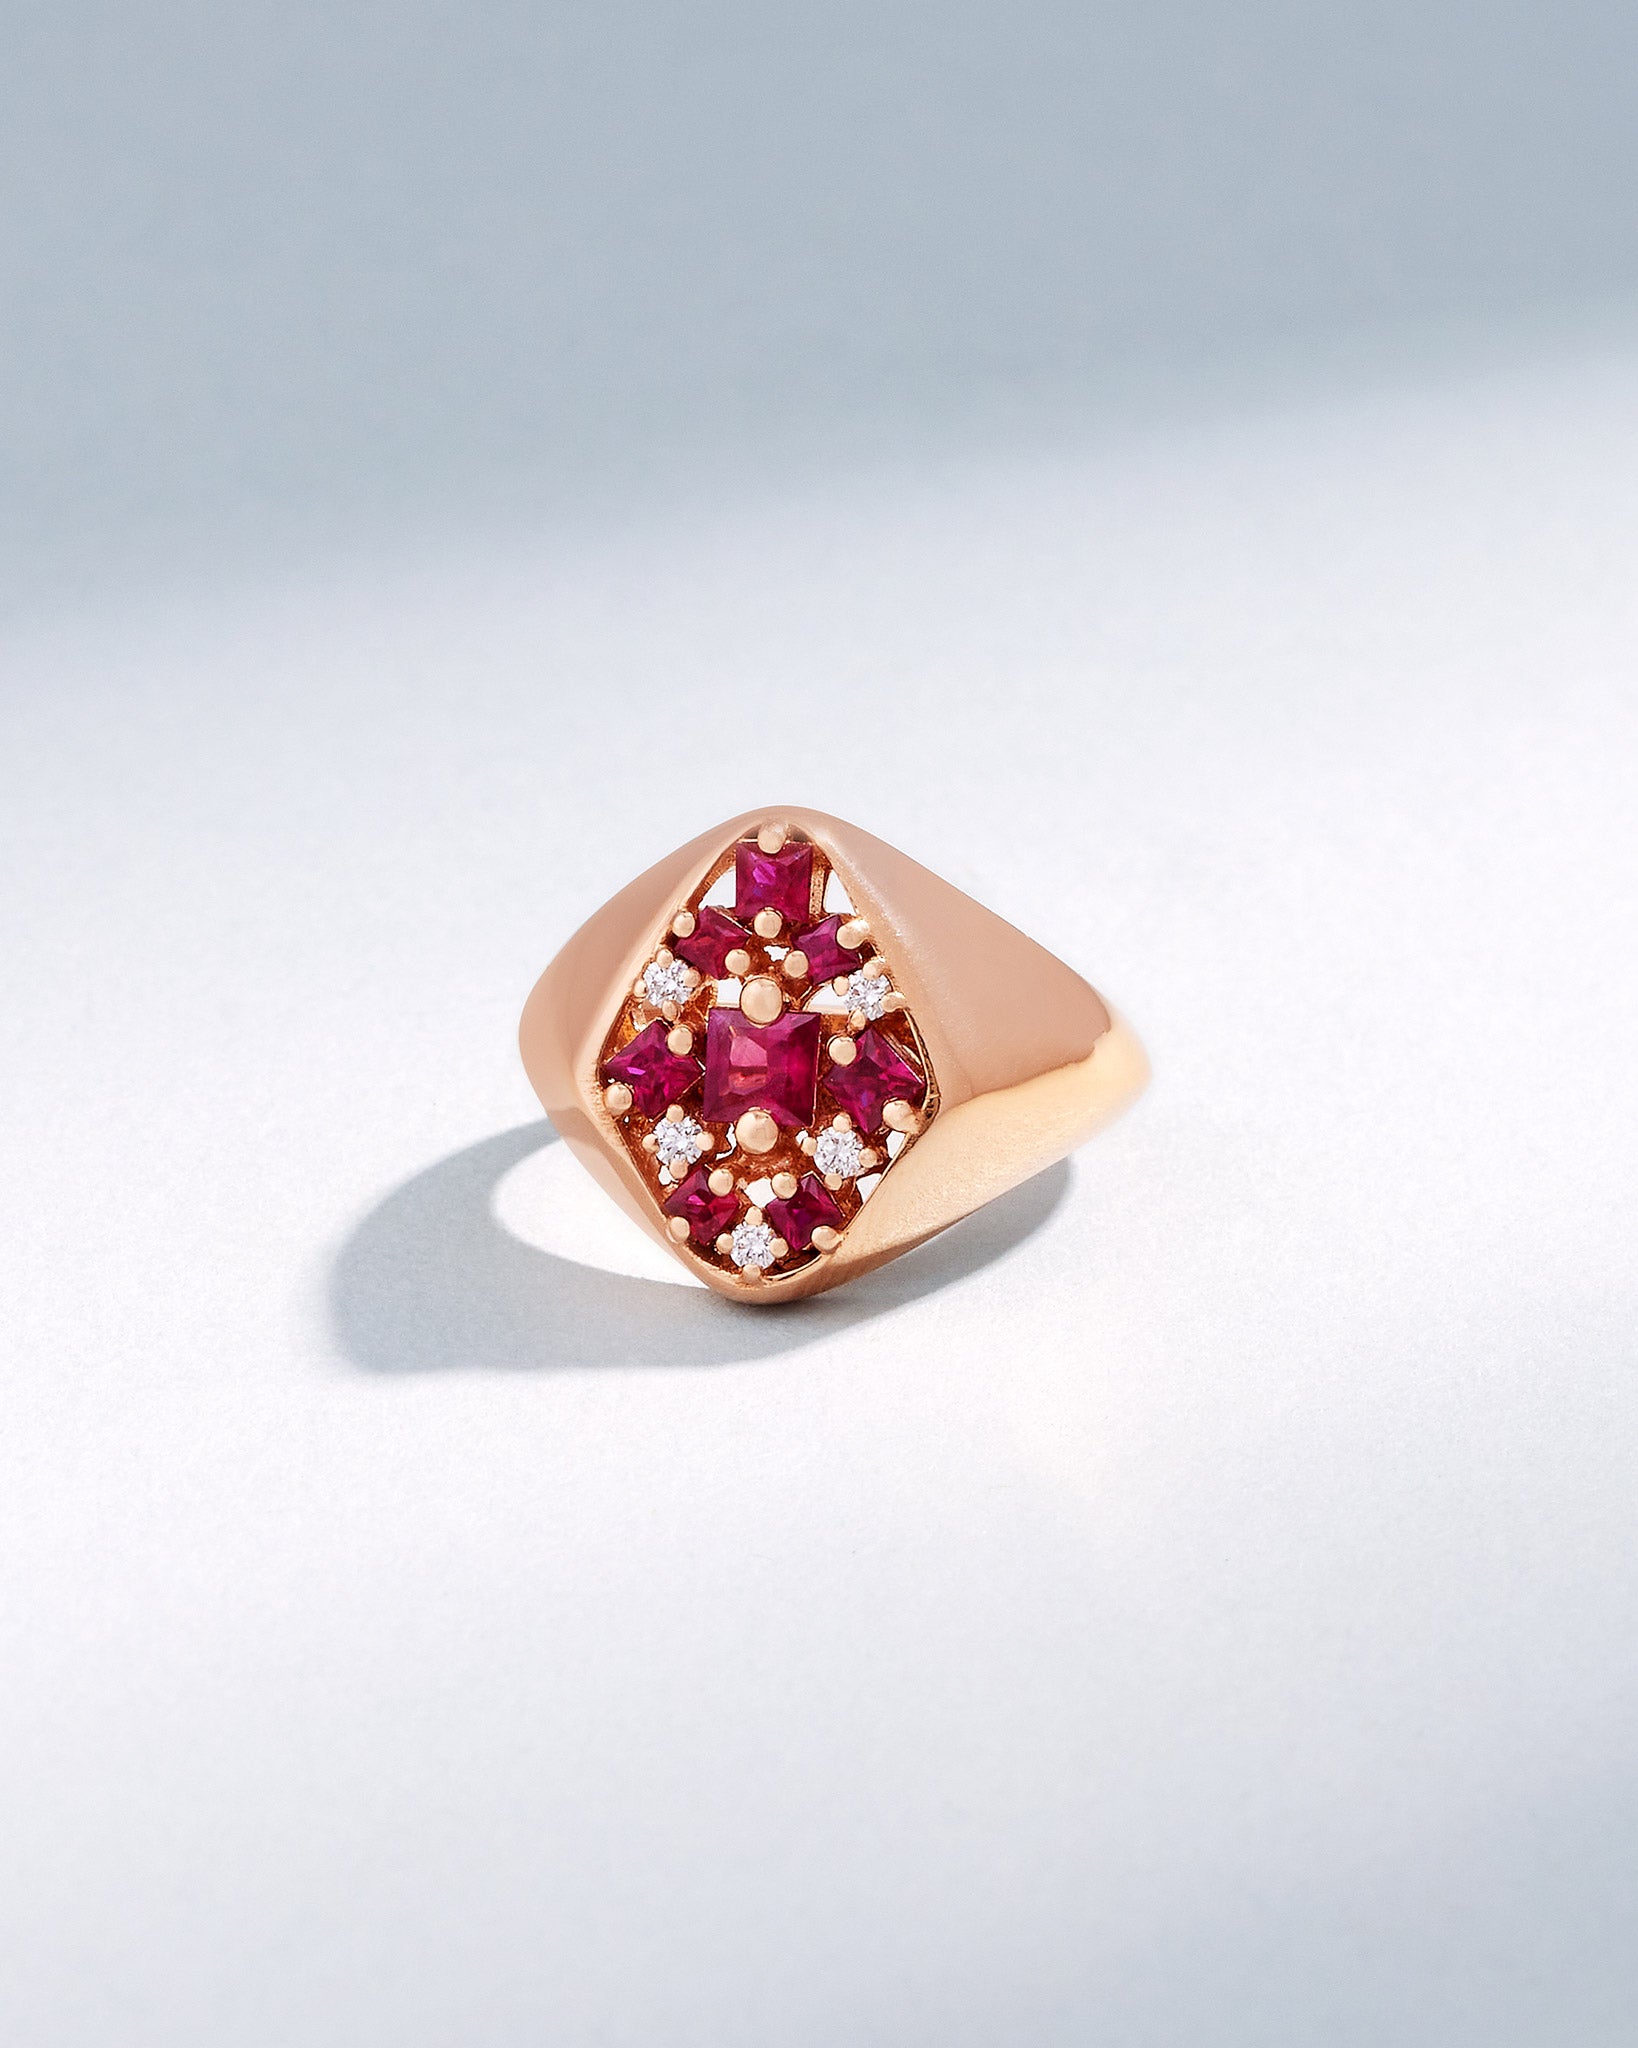 Suzanne Kalan La Fantaisie Star Ruby Signet Ring in 18k rose gold